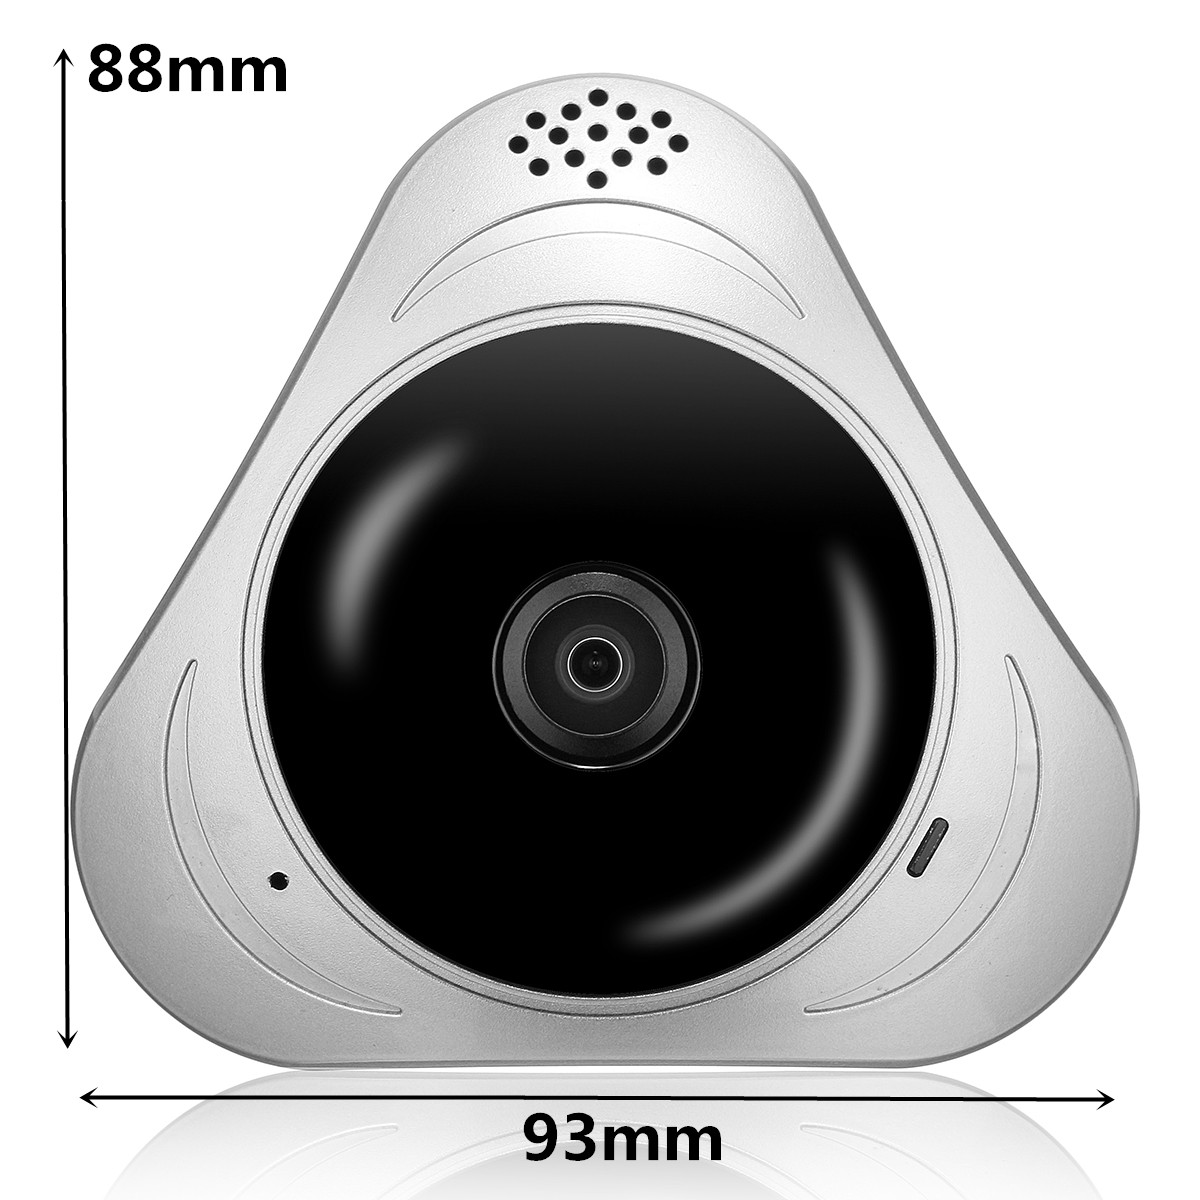 360deg-Panoramic-Monitor-3D-VR-Fisheye-Wifi-IP-Cameras-Security-Surveillance-Home-1286613